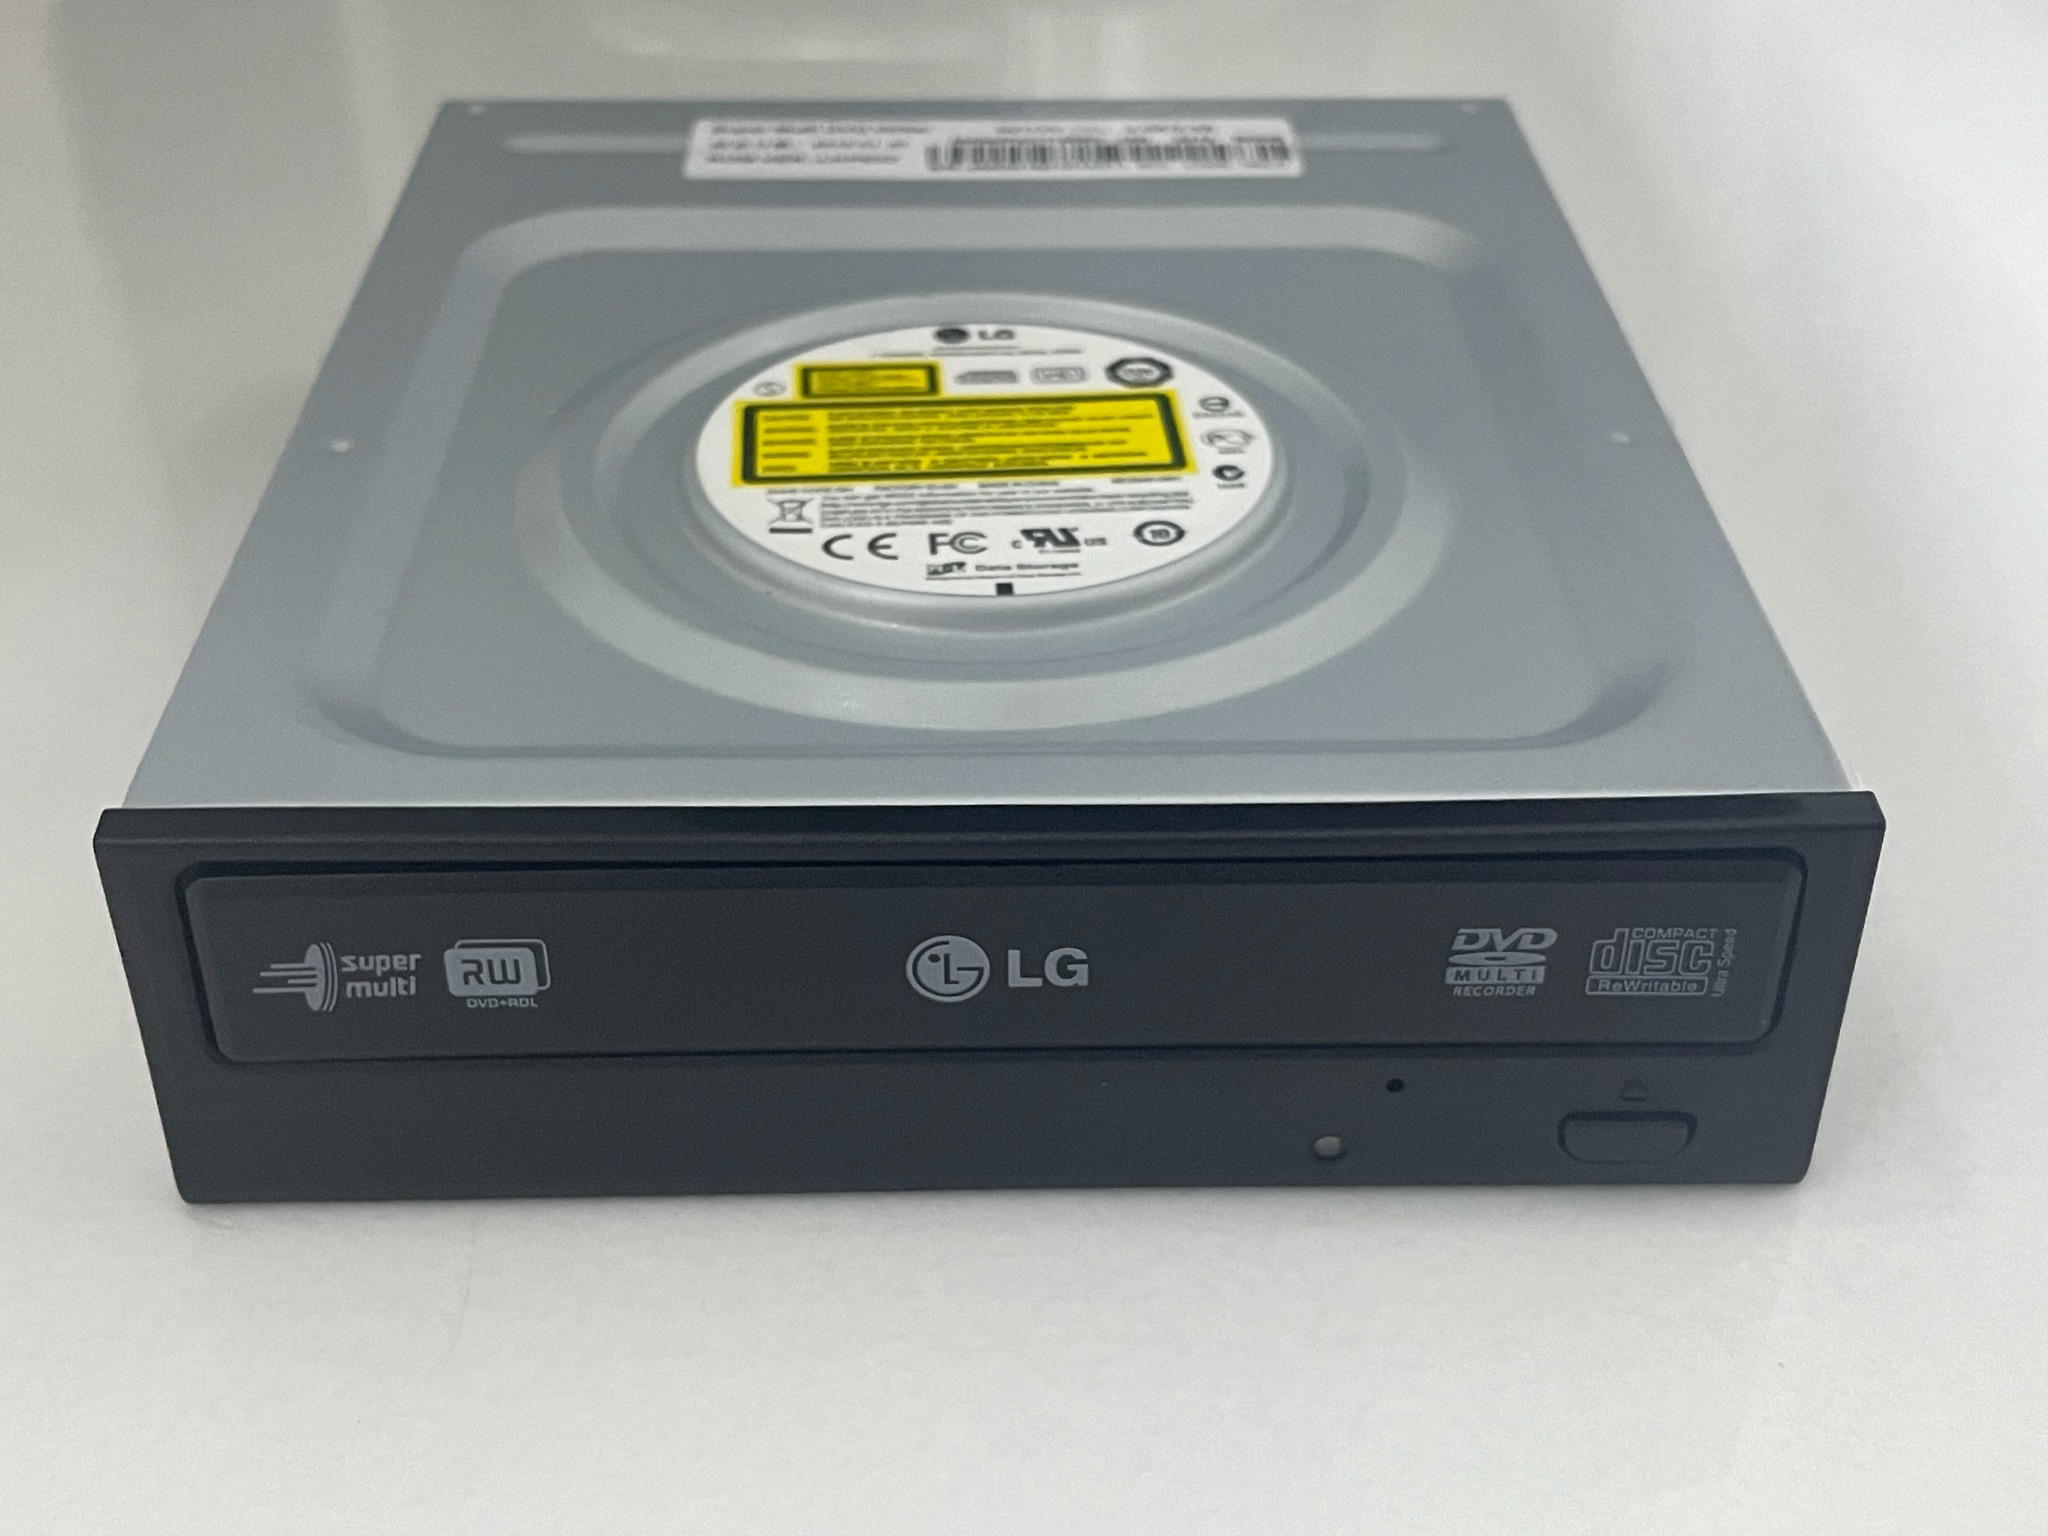 LG Internal Sata DVD-RW Writer, Rs.640 – LT Online Store